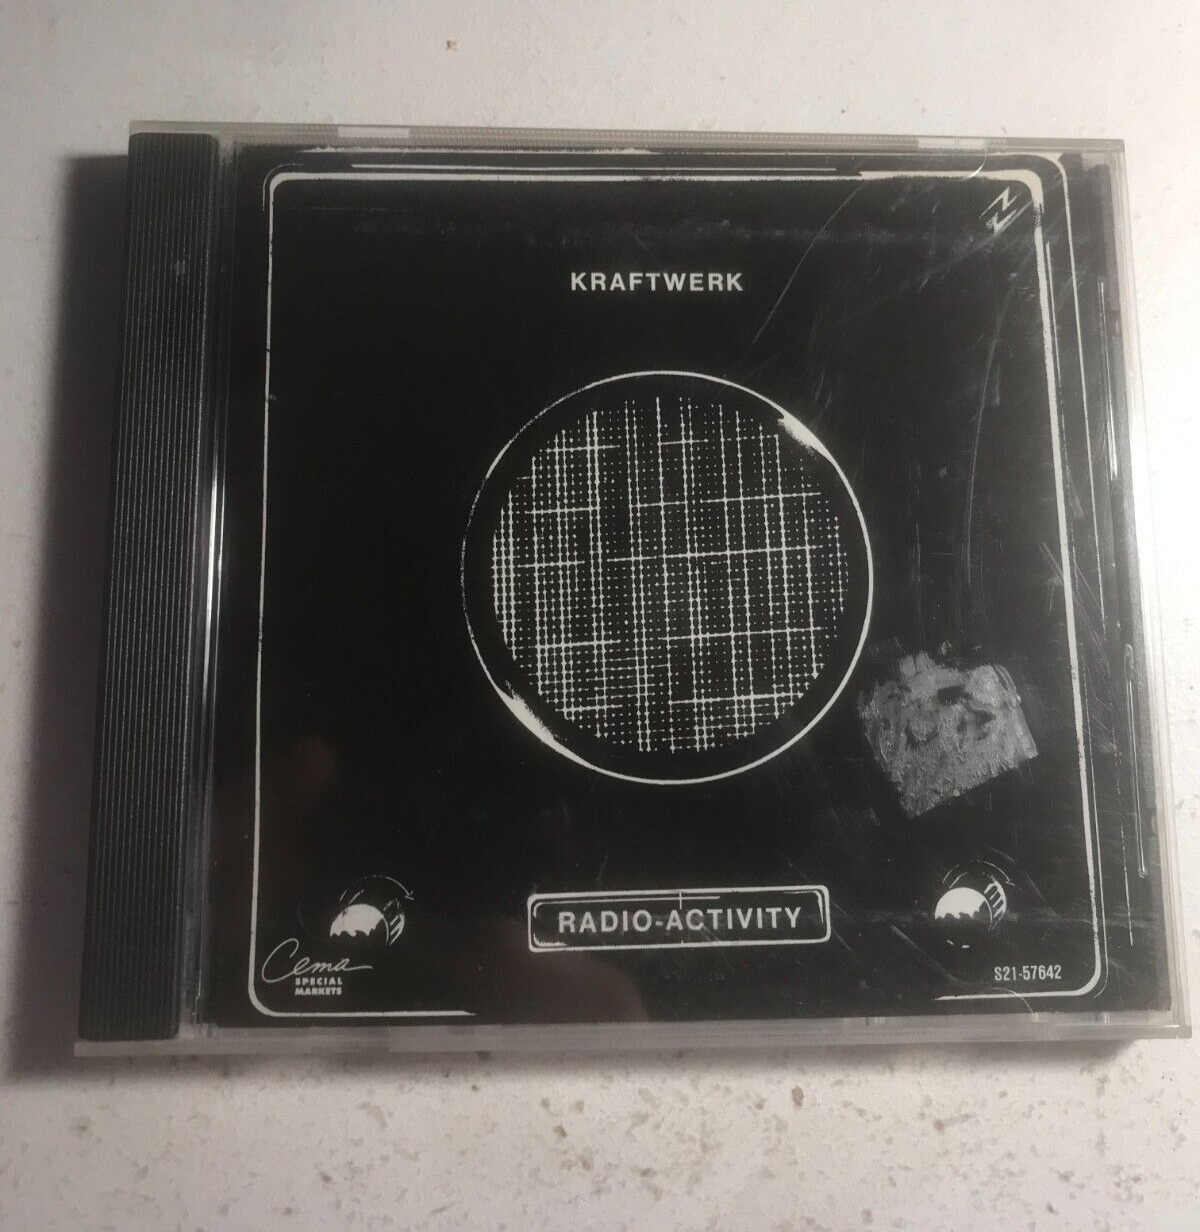 Kraftwerk - Radio-Activity (CD, 1992) LIKE NEW